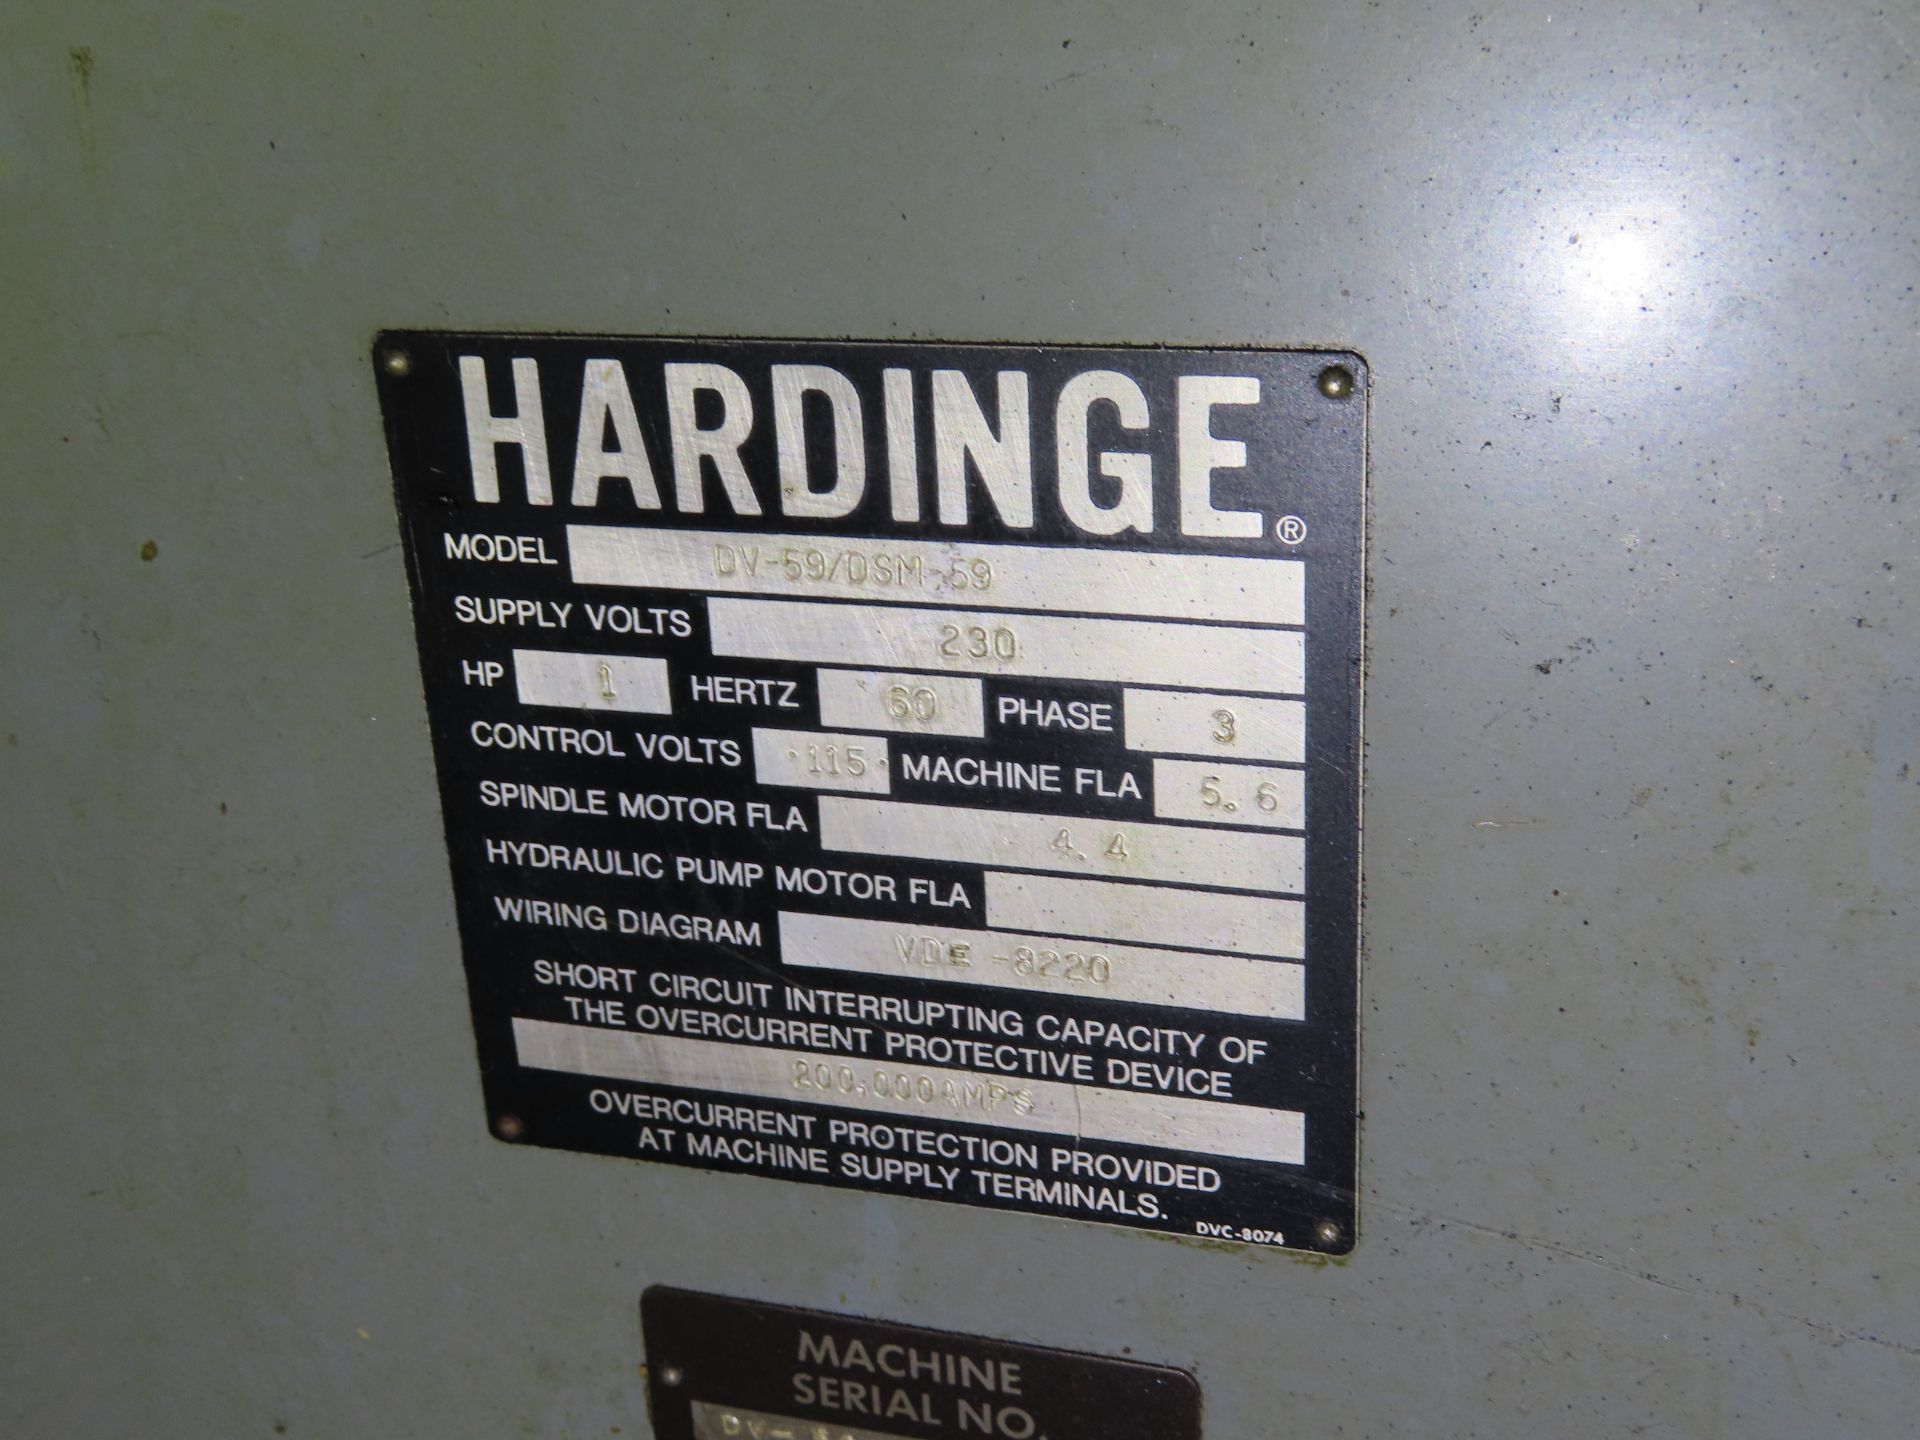 Hardinge Super Precision Lathe, Model DV-59/DSM-59 - Image 3 of 4